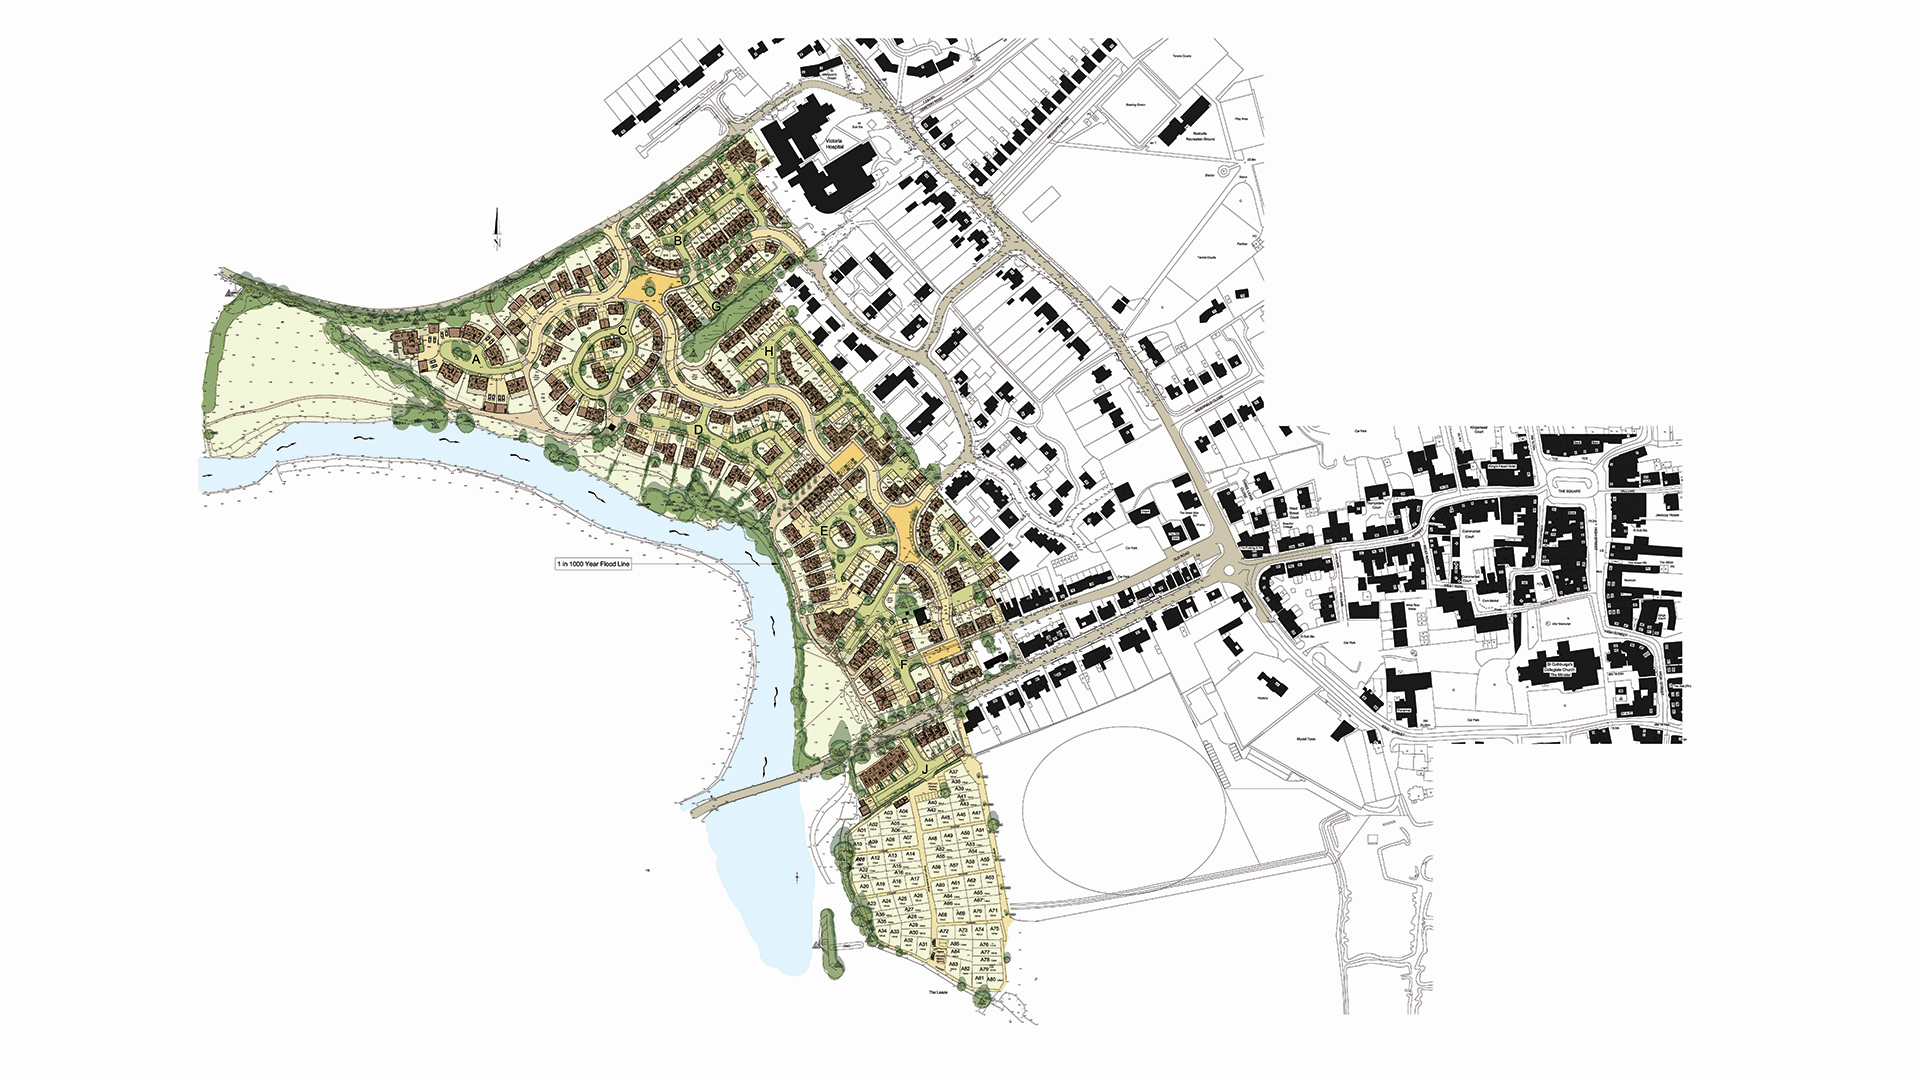 masterplan site plan of housing site next to river